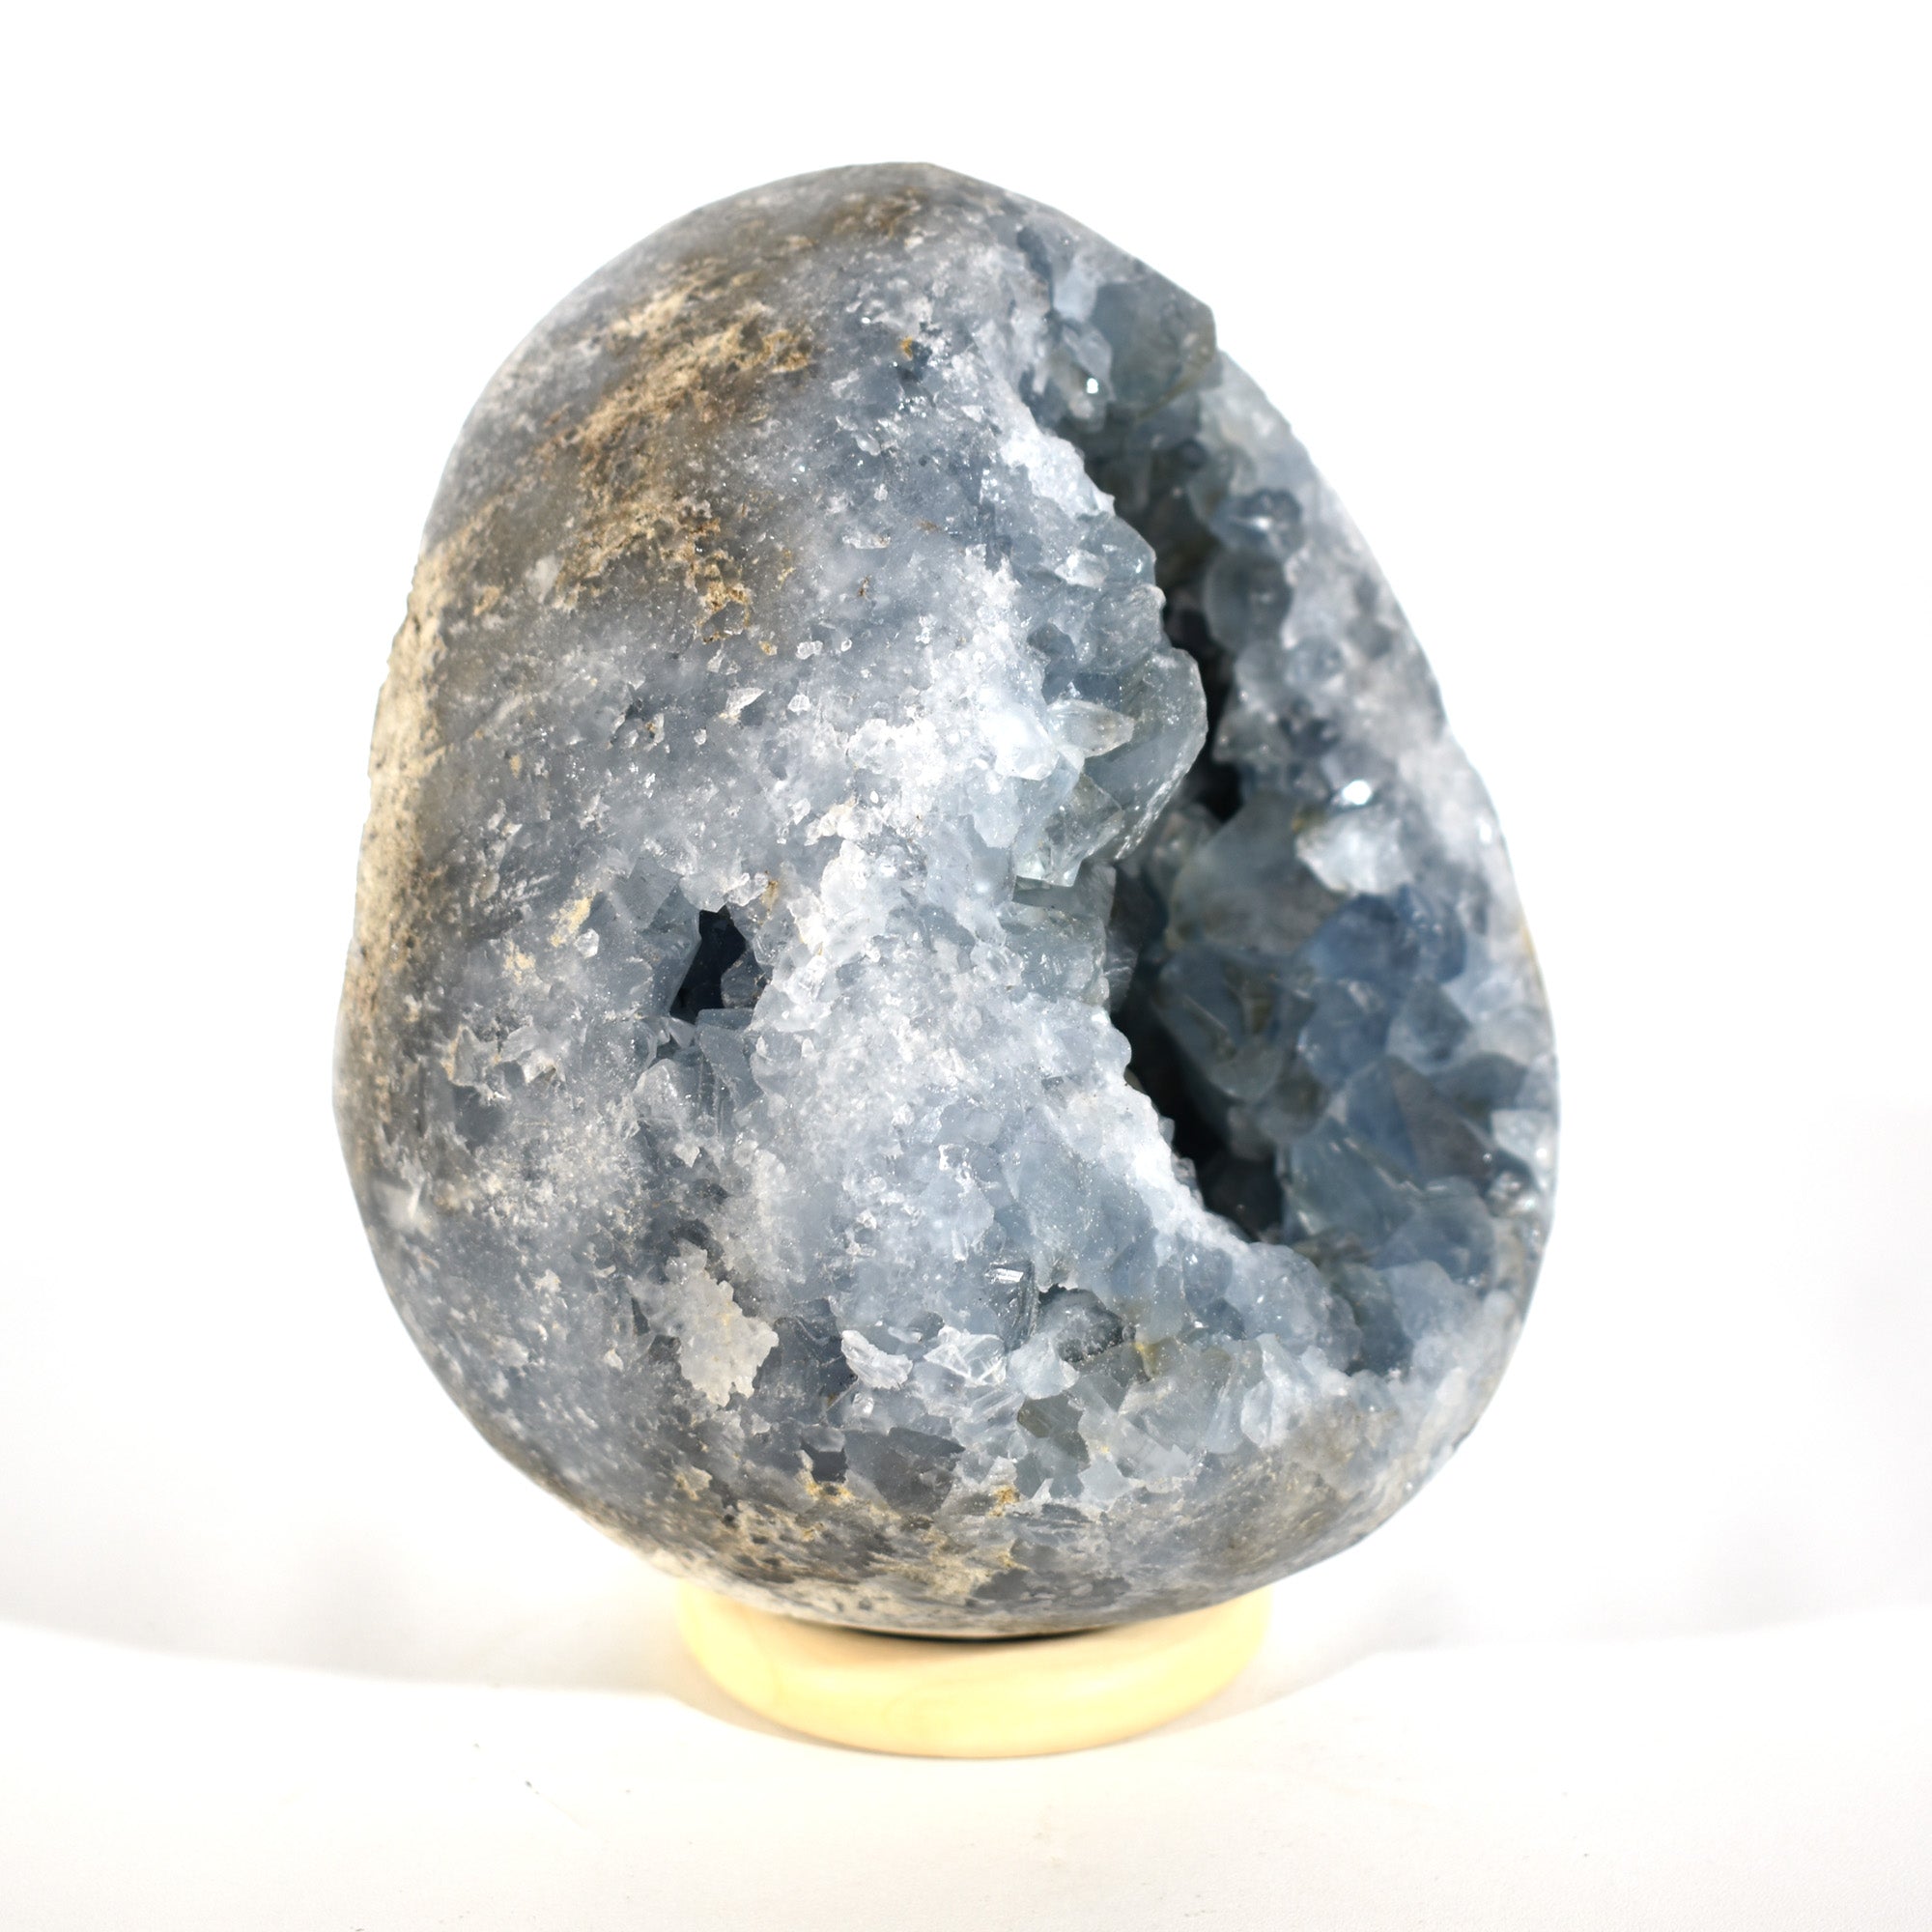 Celestine Geode (12.4 Lbs)